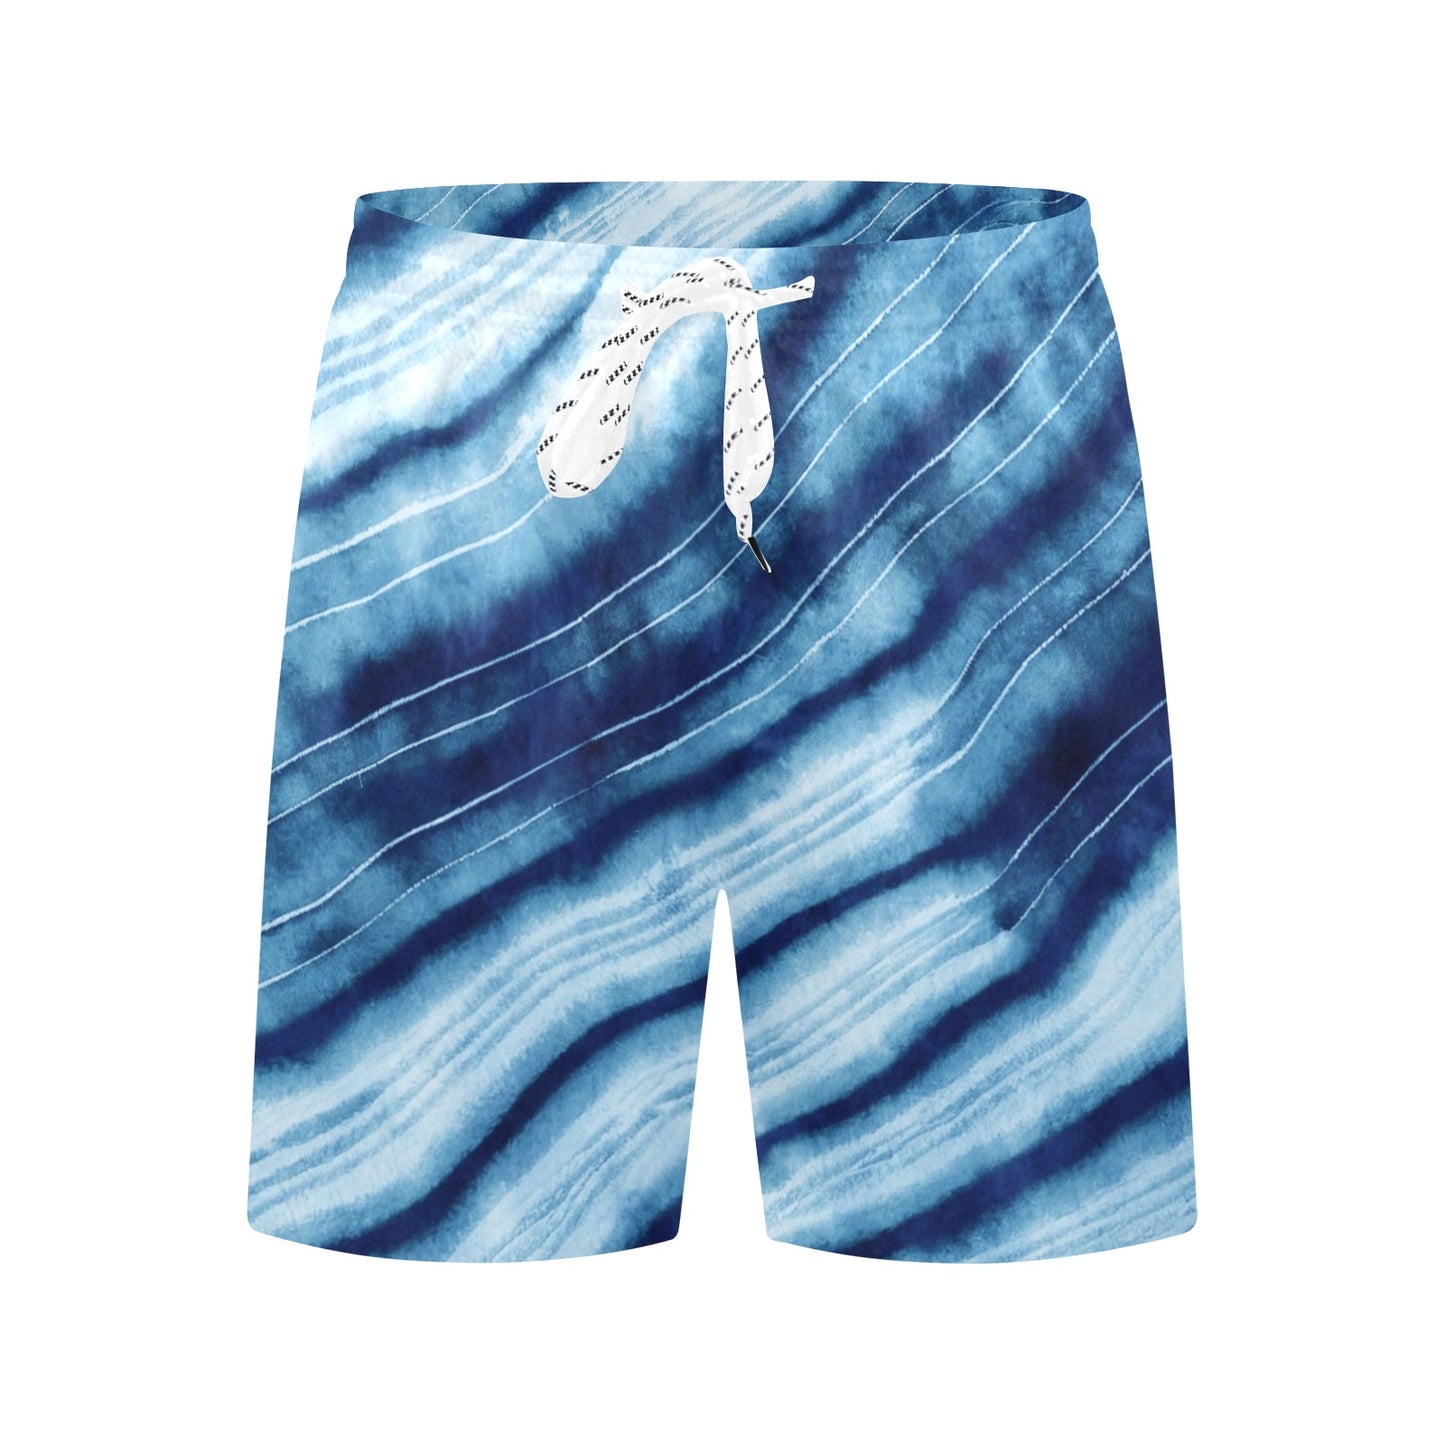 Tie Dye Men Swim Trunks, Blue Shibori Mid Length Shorts Beach Pockets Mesh Lining Drawstring Boys Casual Bathing Suit Plus Size Swimwear